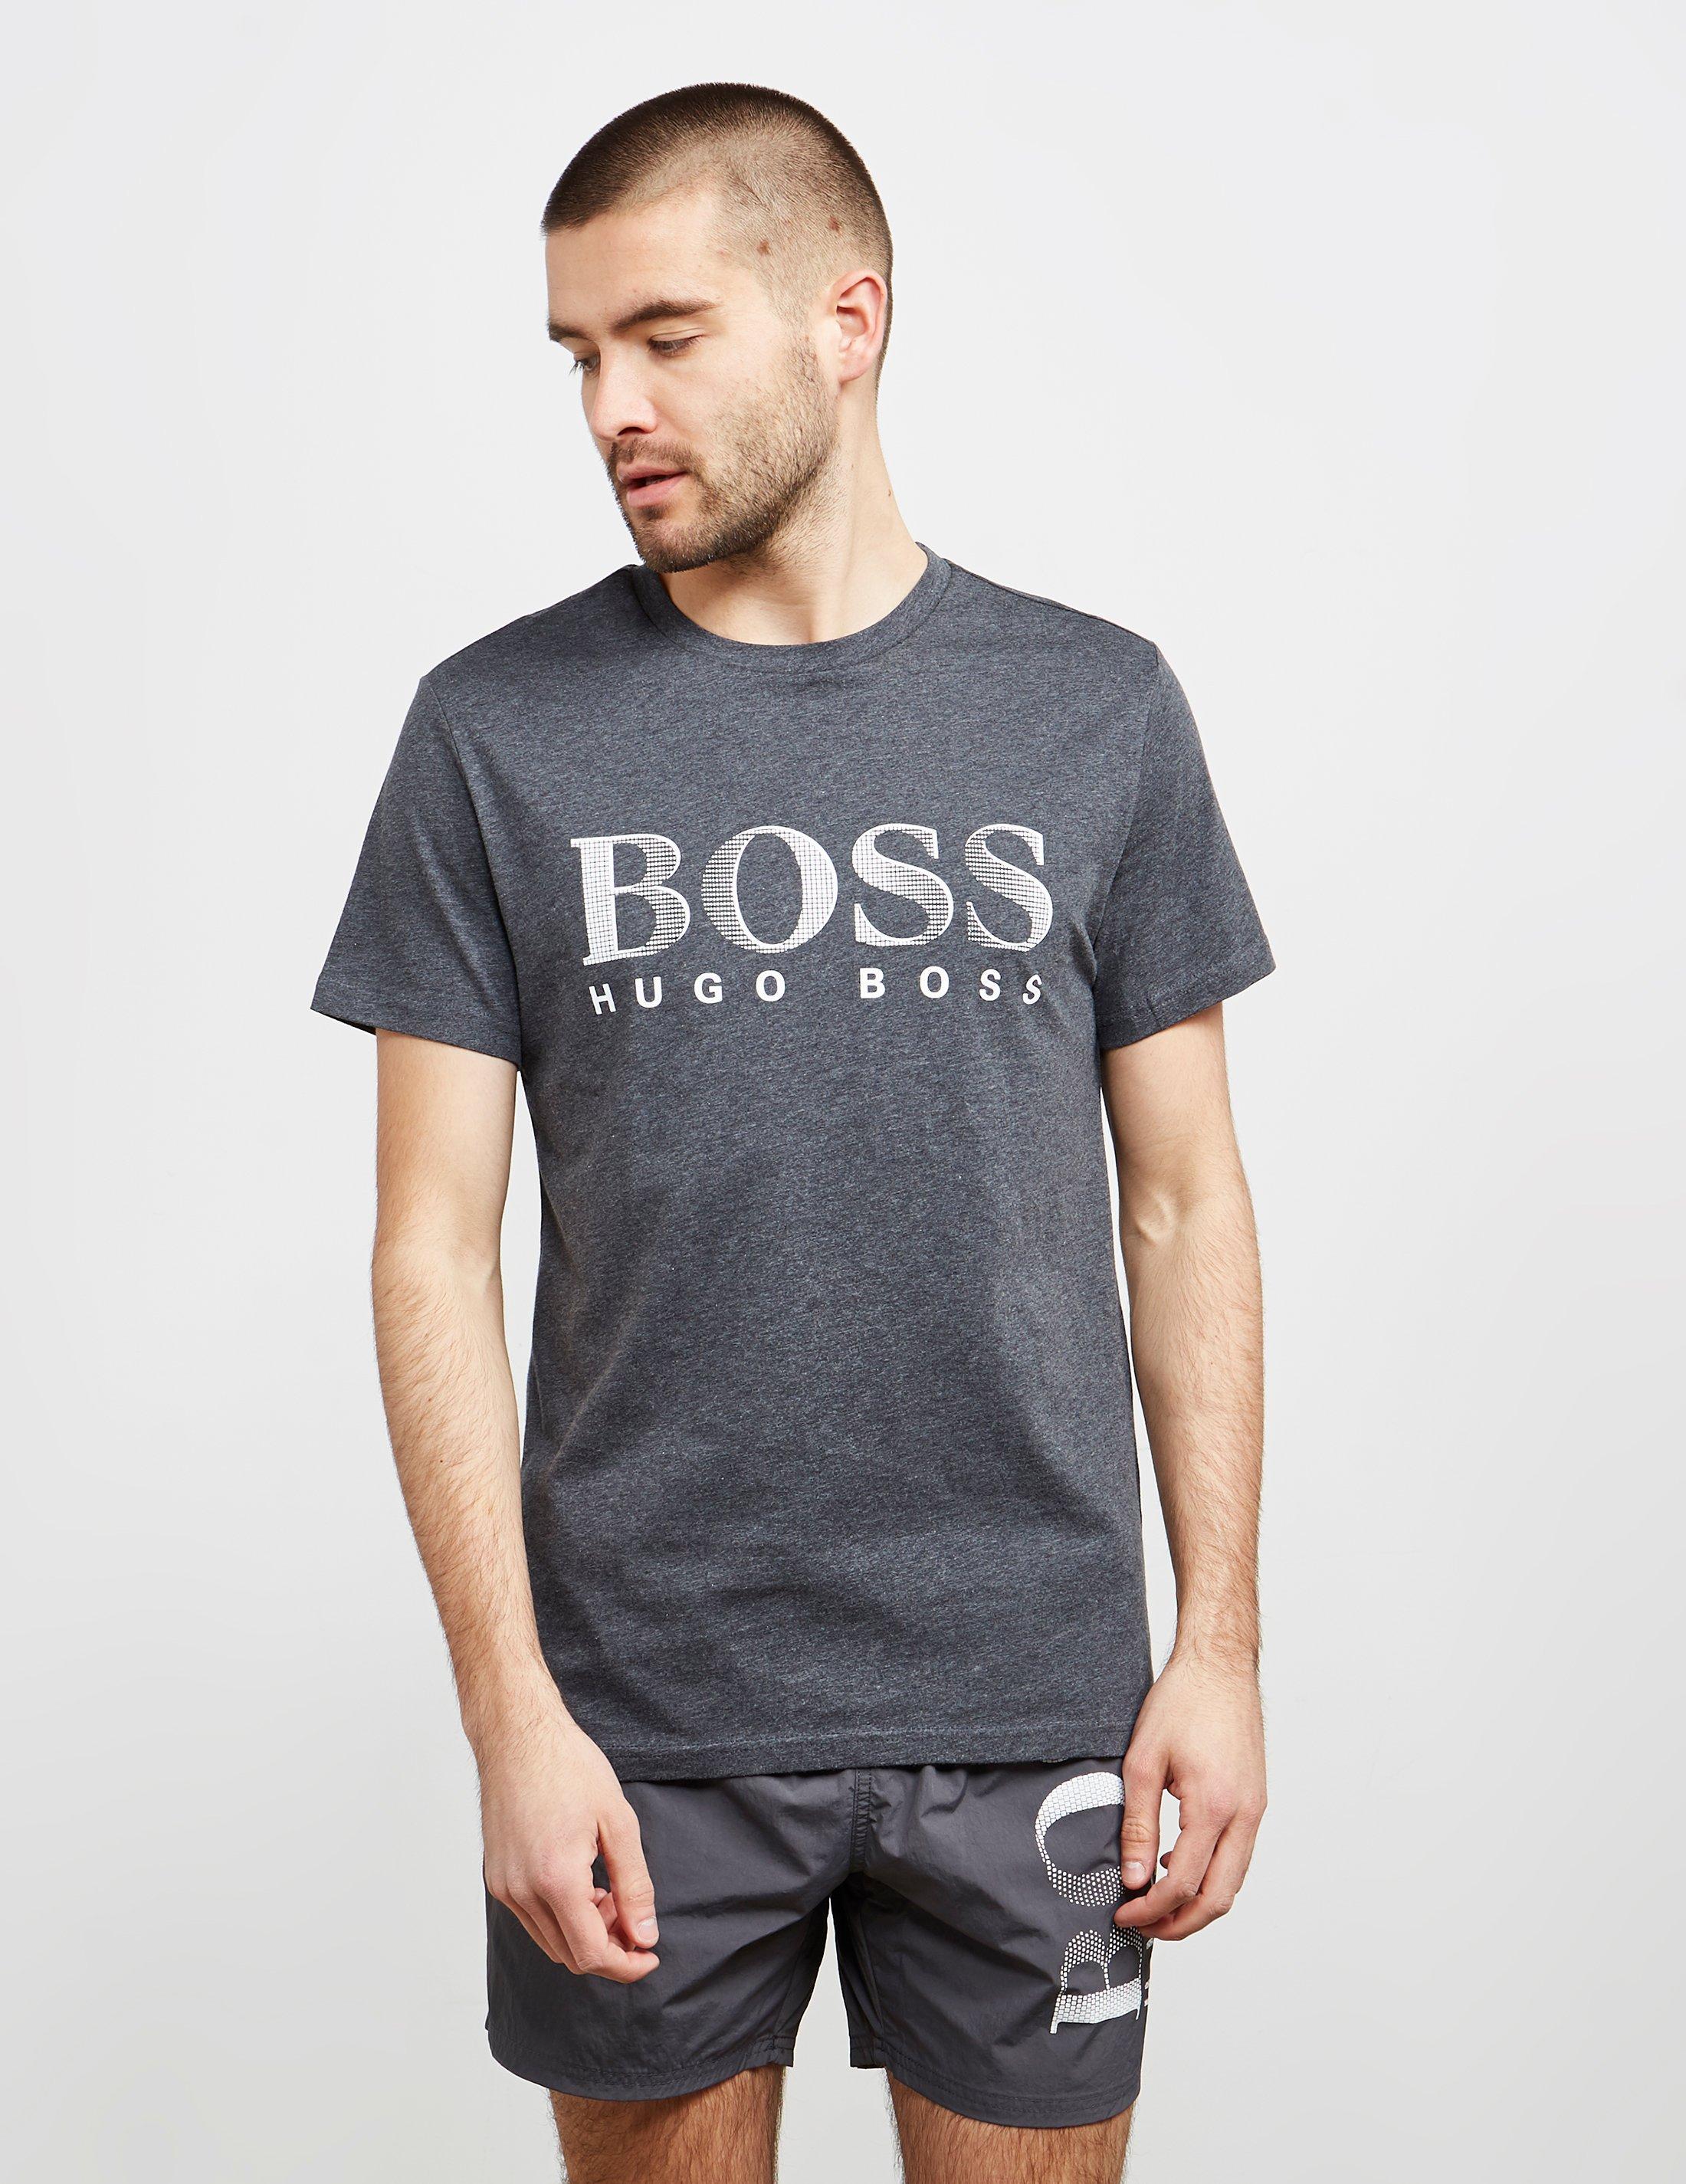 hugo boss grey shirt